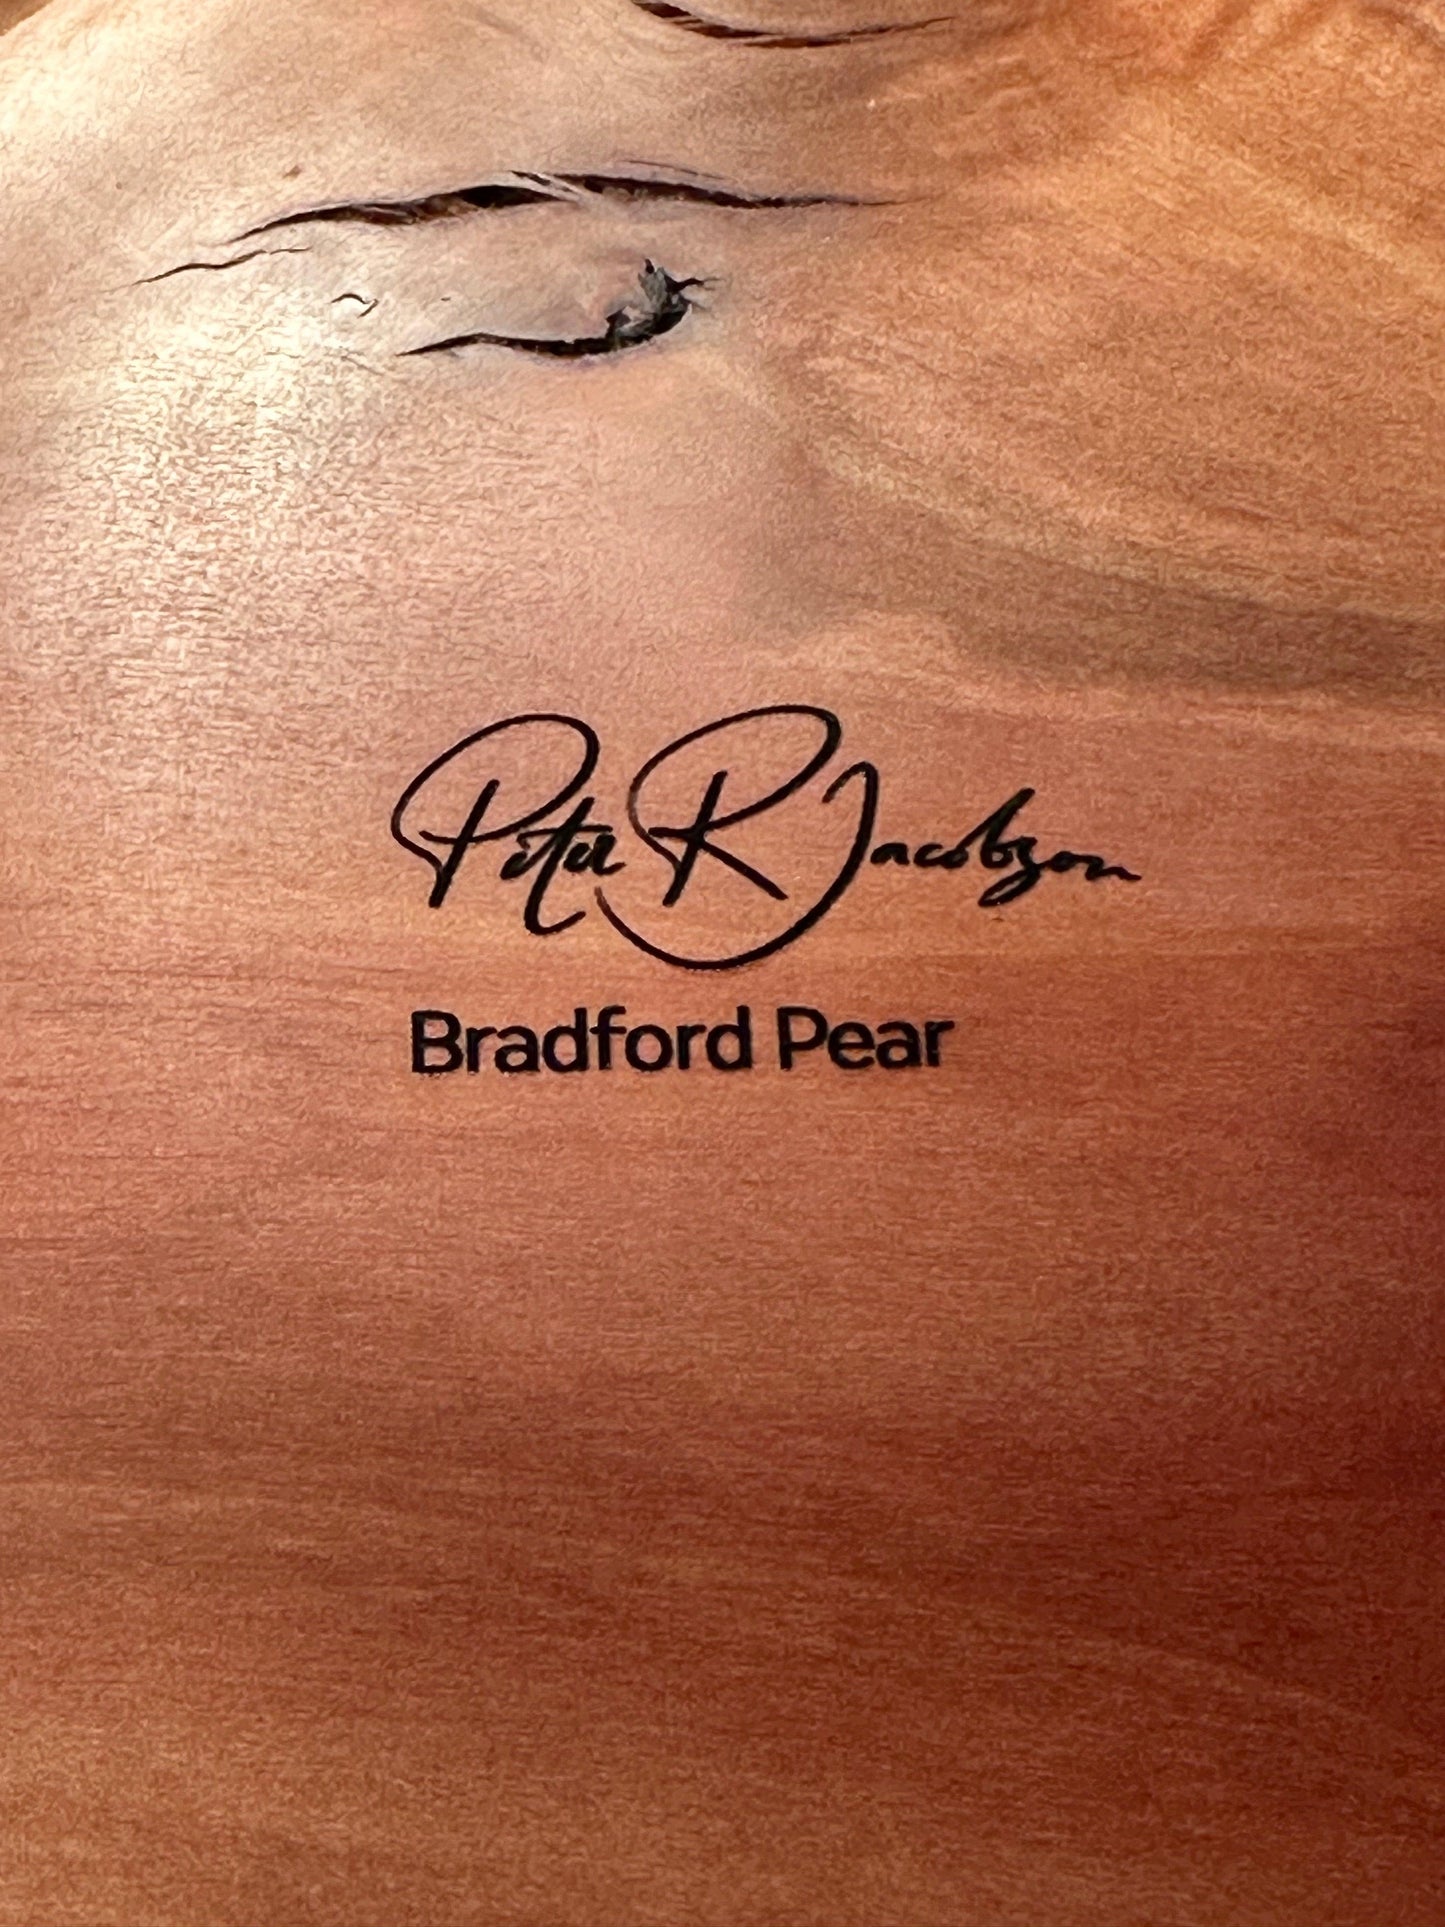 Large Bradford Pear Bowl - Rare Earth Bowls